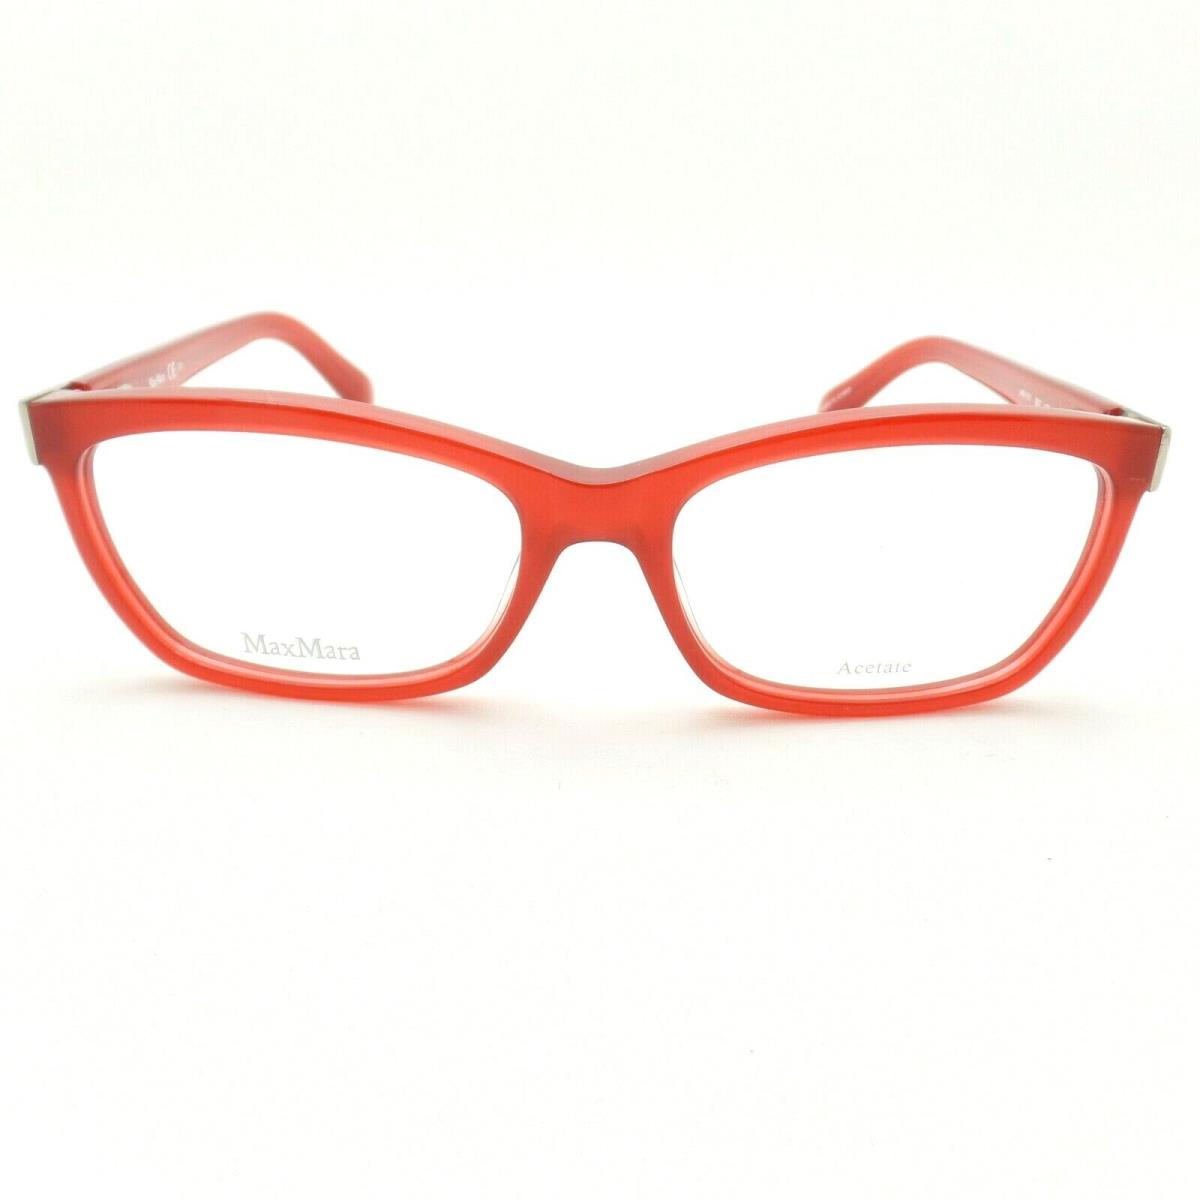 Max Mara sunglasses  - Frame: Cherry Red w/ Crystals 1